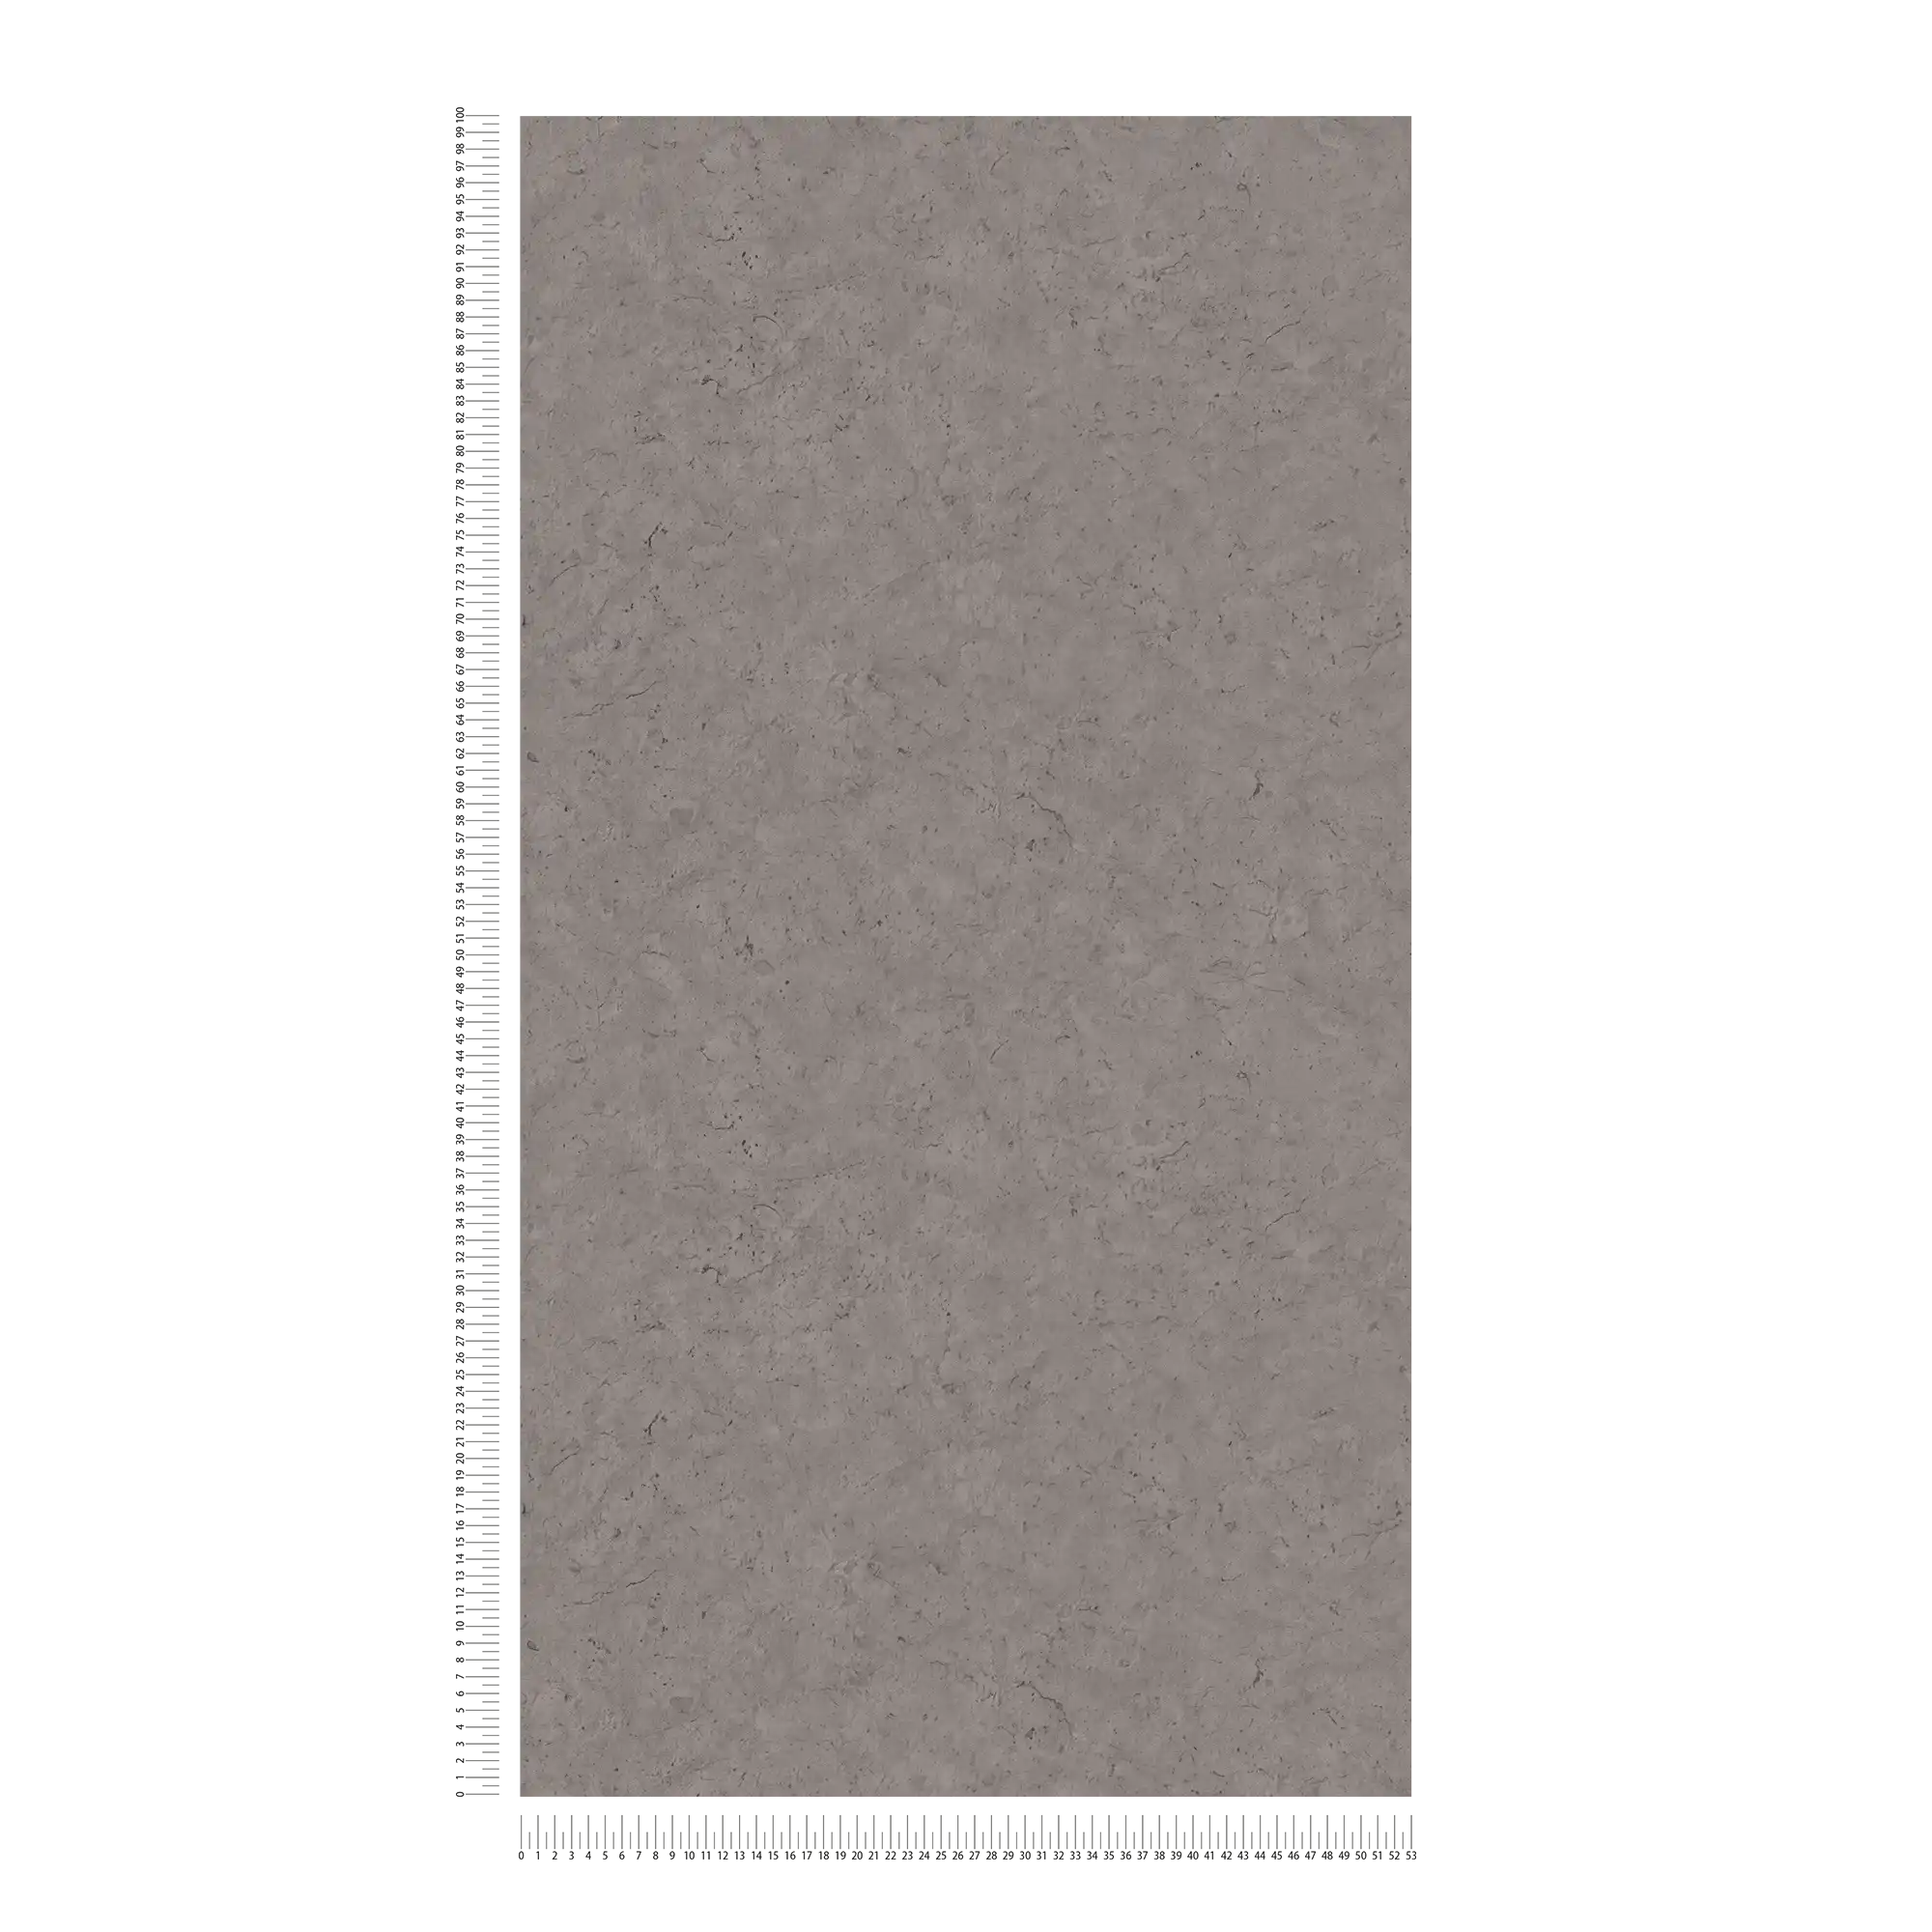             Dark plain wallpaper with subtle concrete look - grey
        